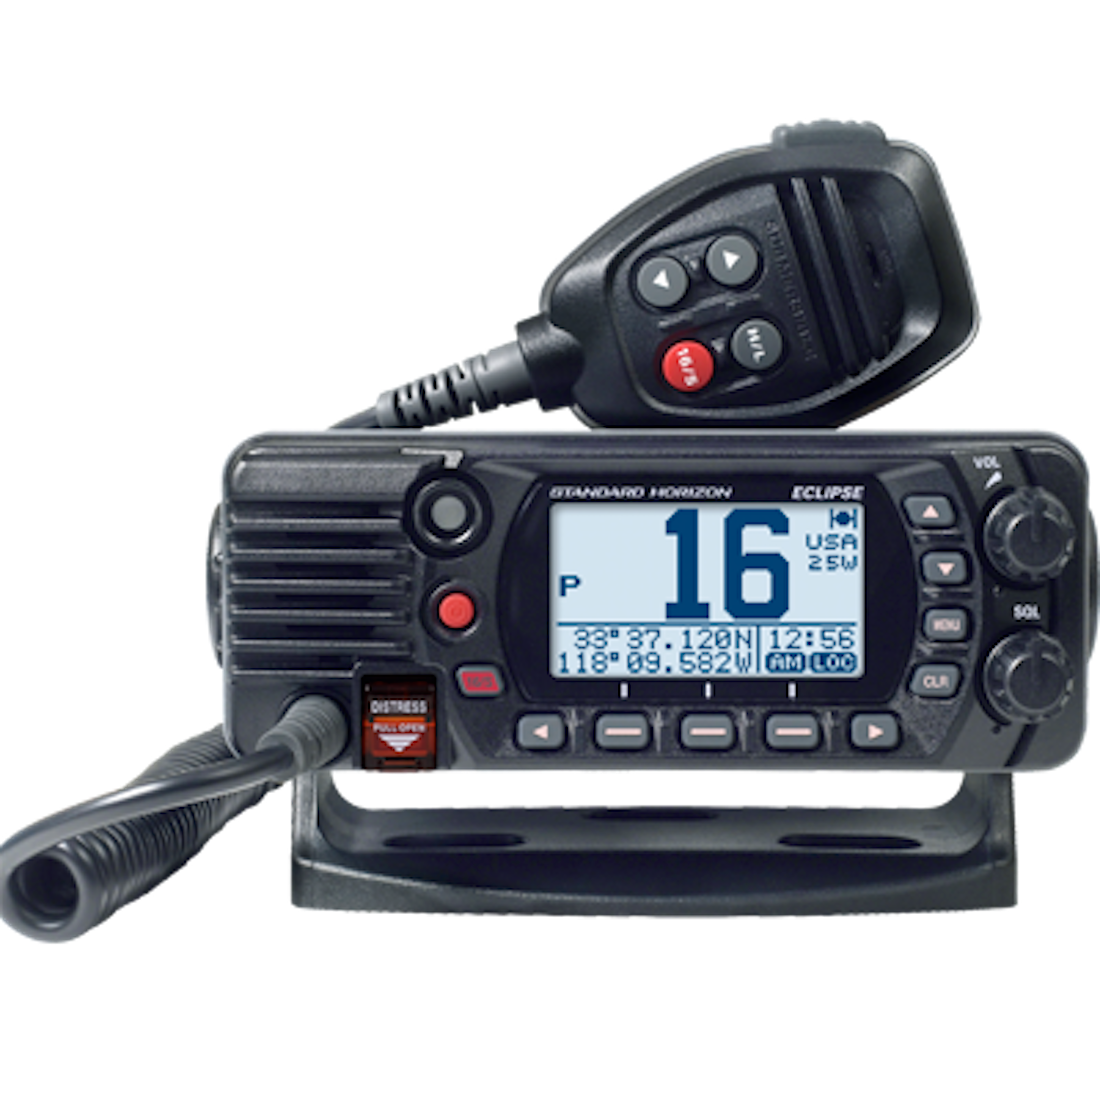 Standard Horizon GX1400 Fixed Mount VHF - Black [GX1400B]